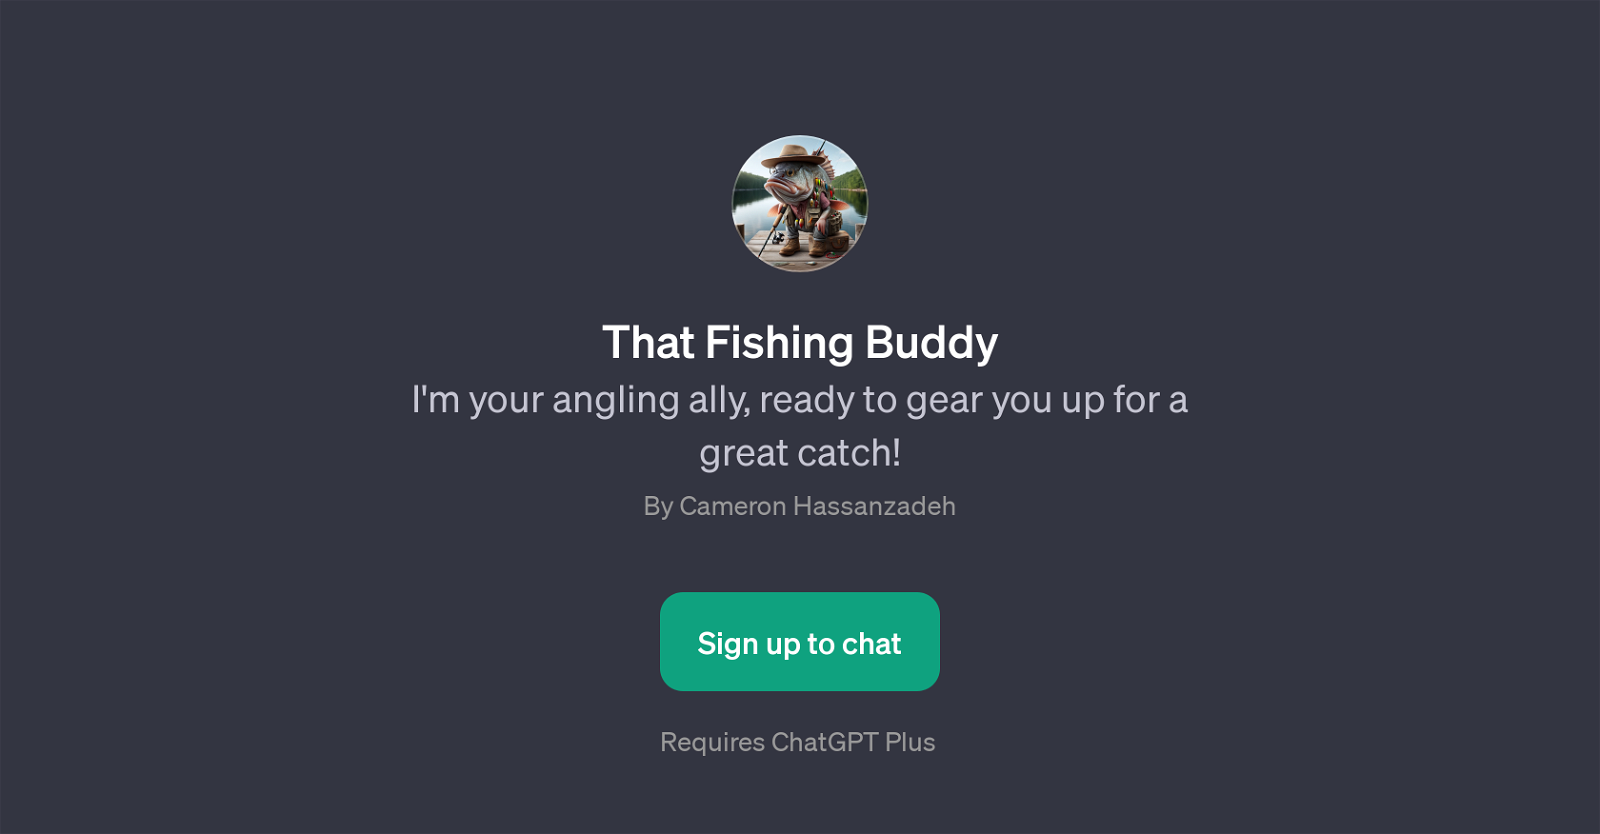 That Fishing Buddy website